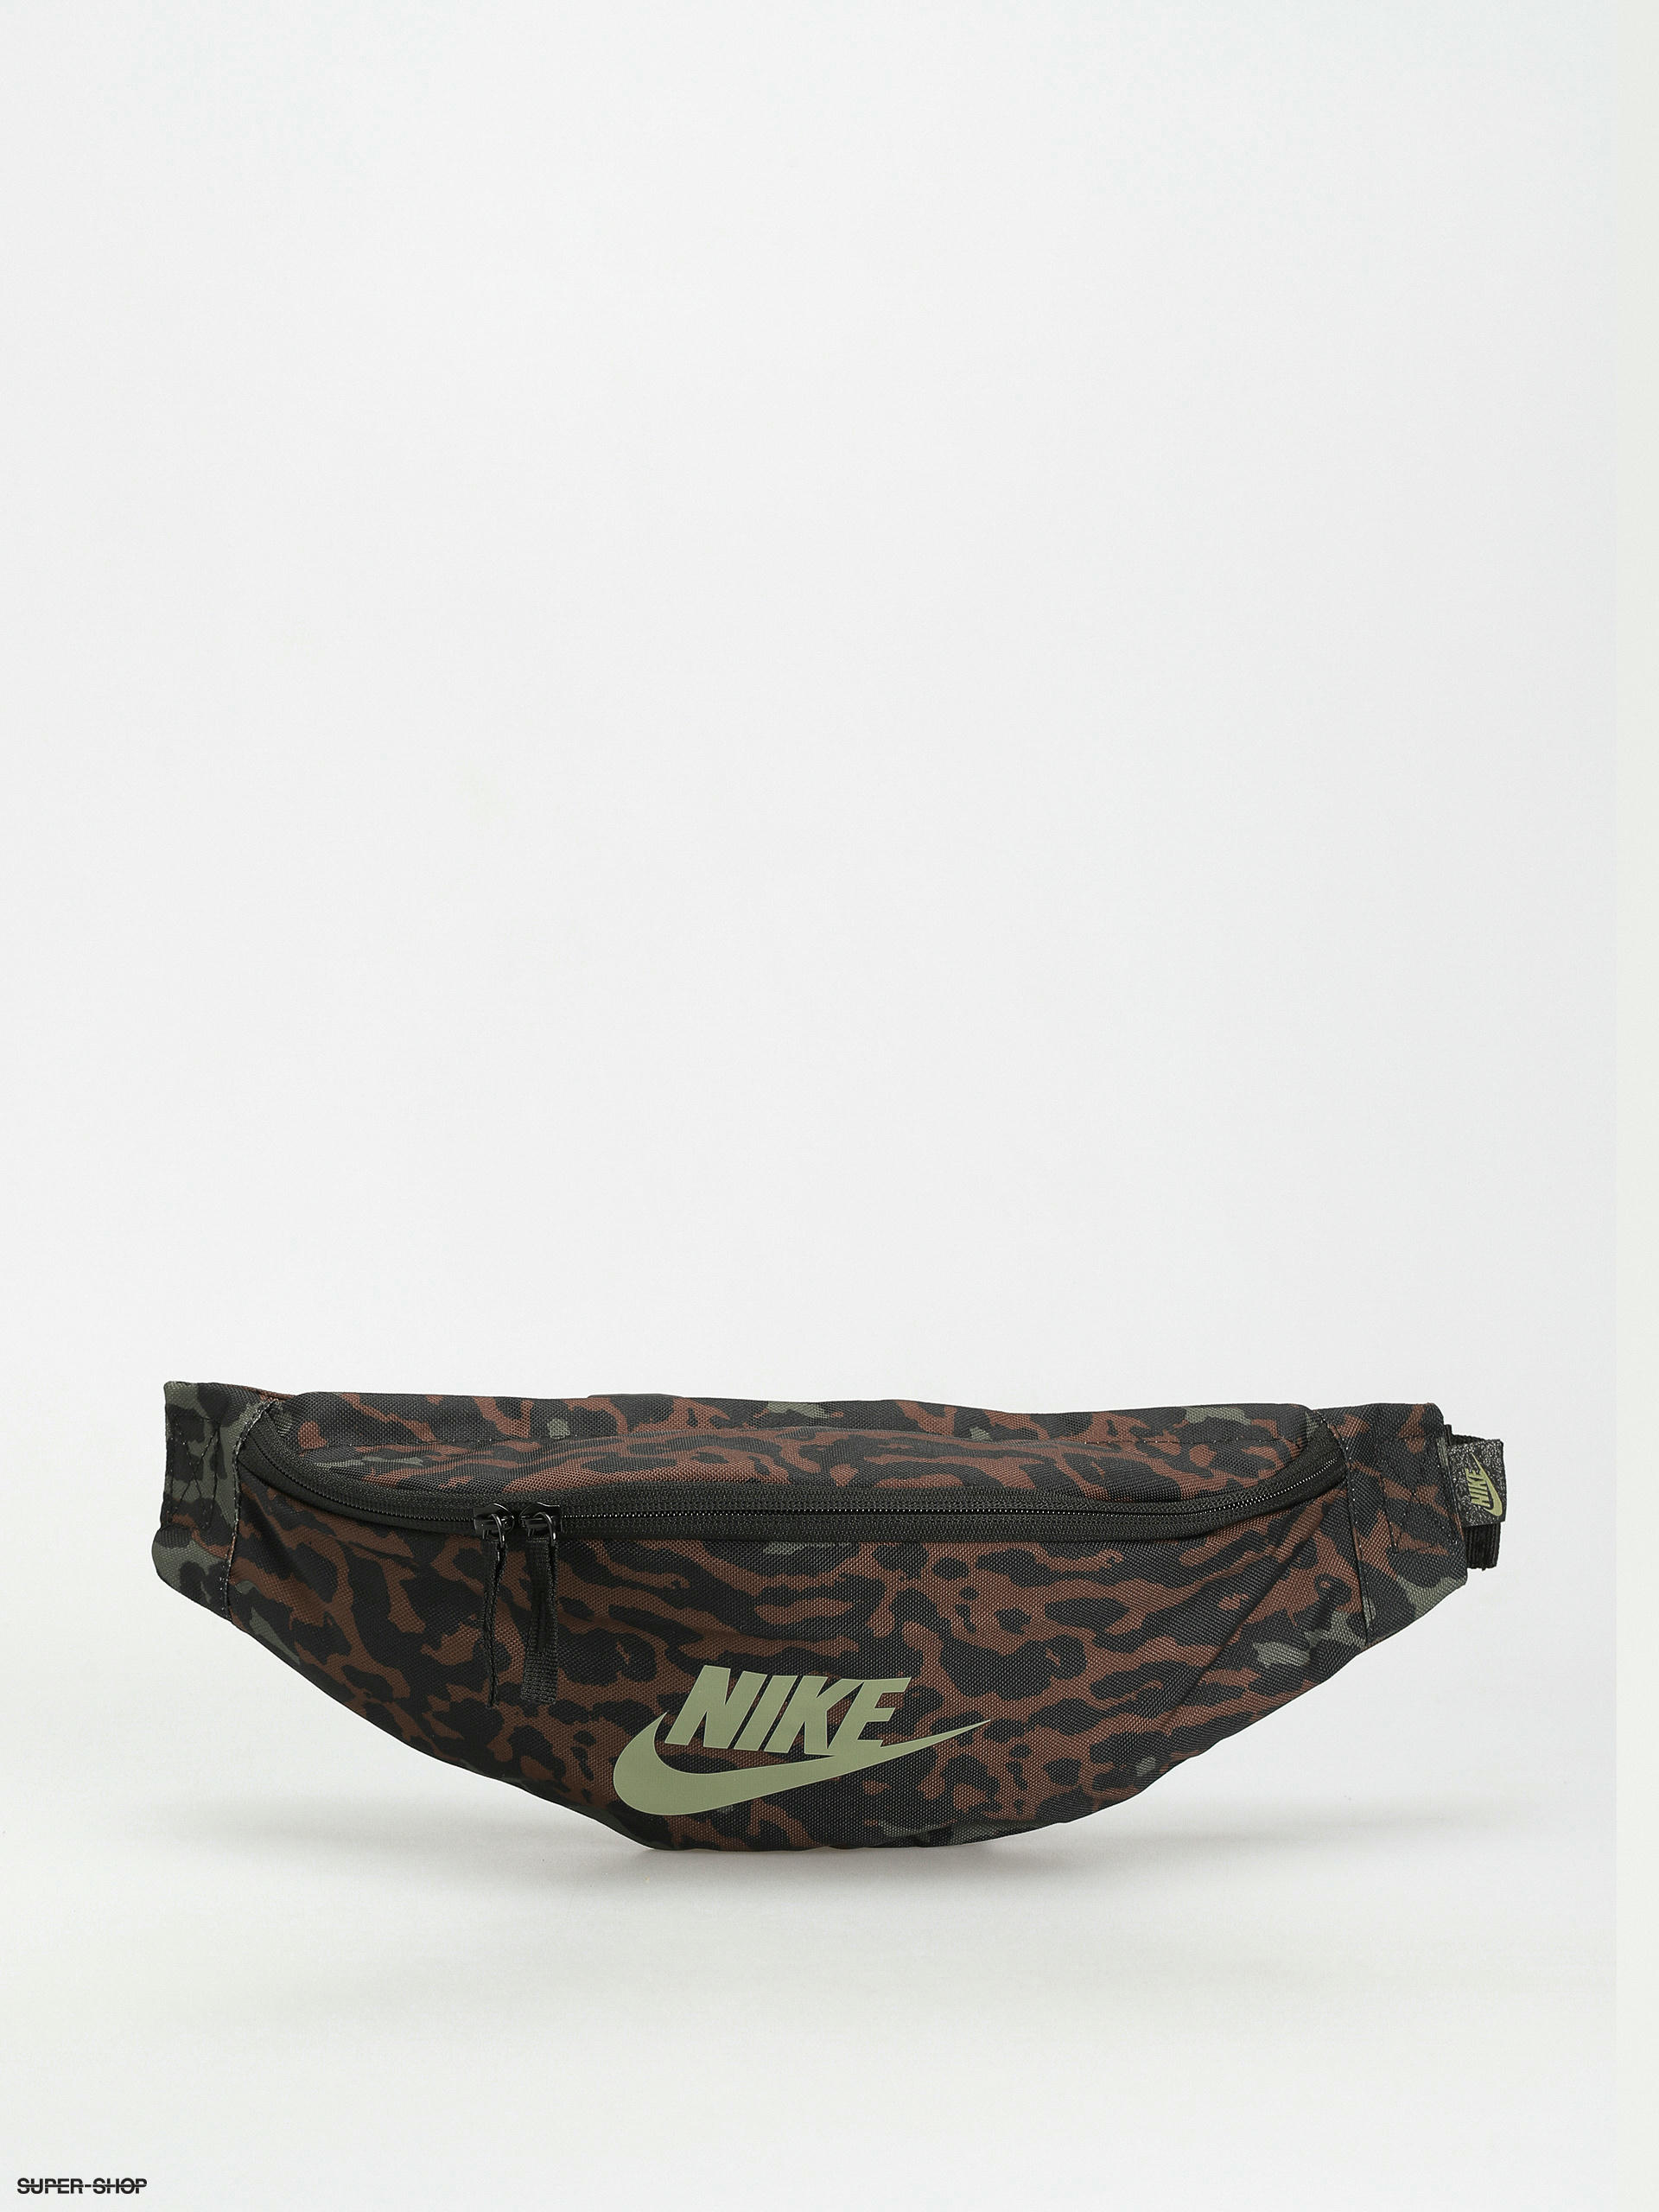 2007 Retro Nike Bowling Bag Style Purse Shiny Black Patent Nylon w/ Coin  Pouch | eBay